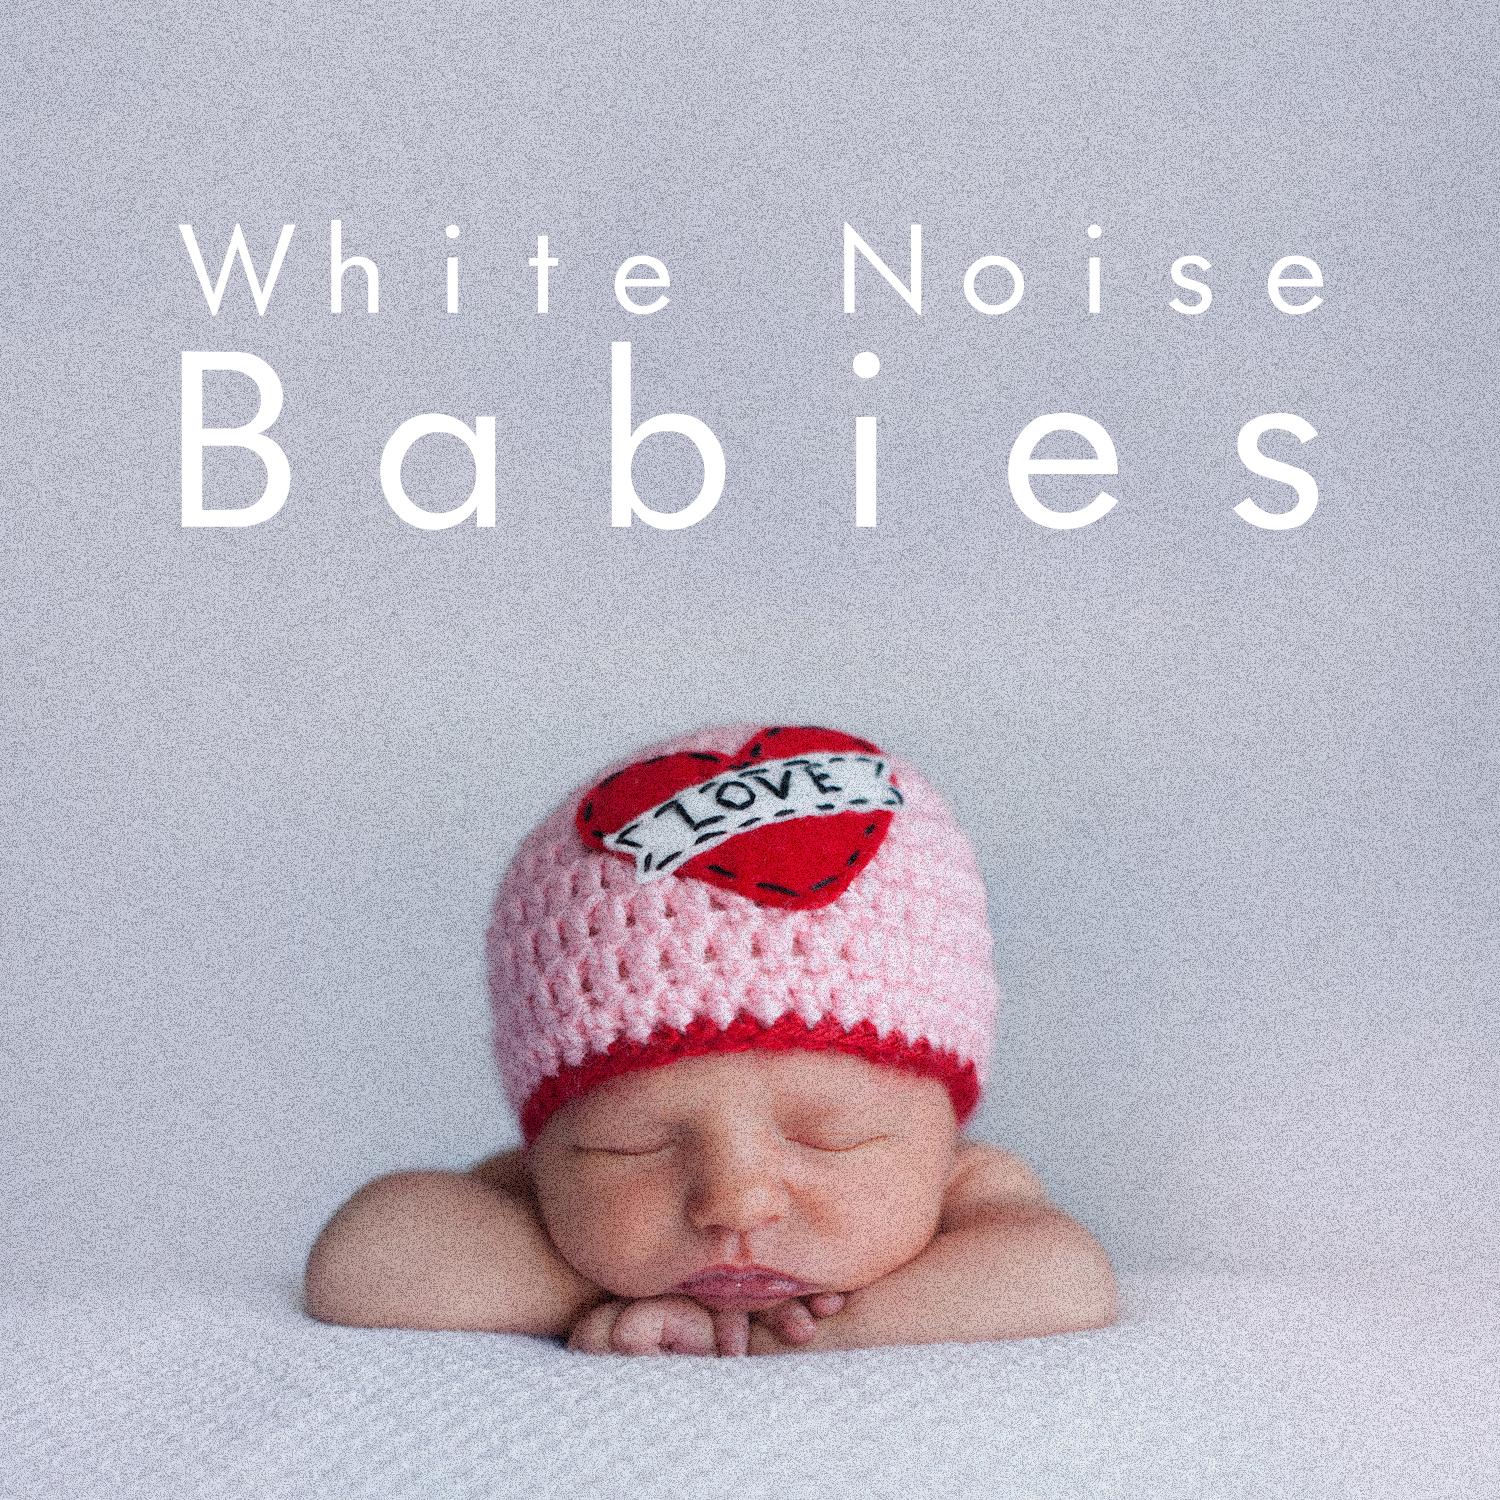 White Noise: Static